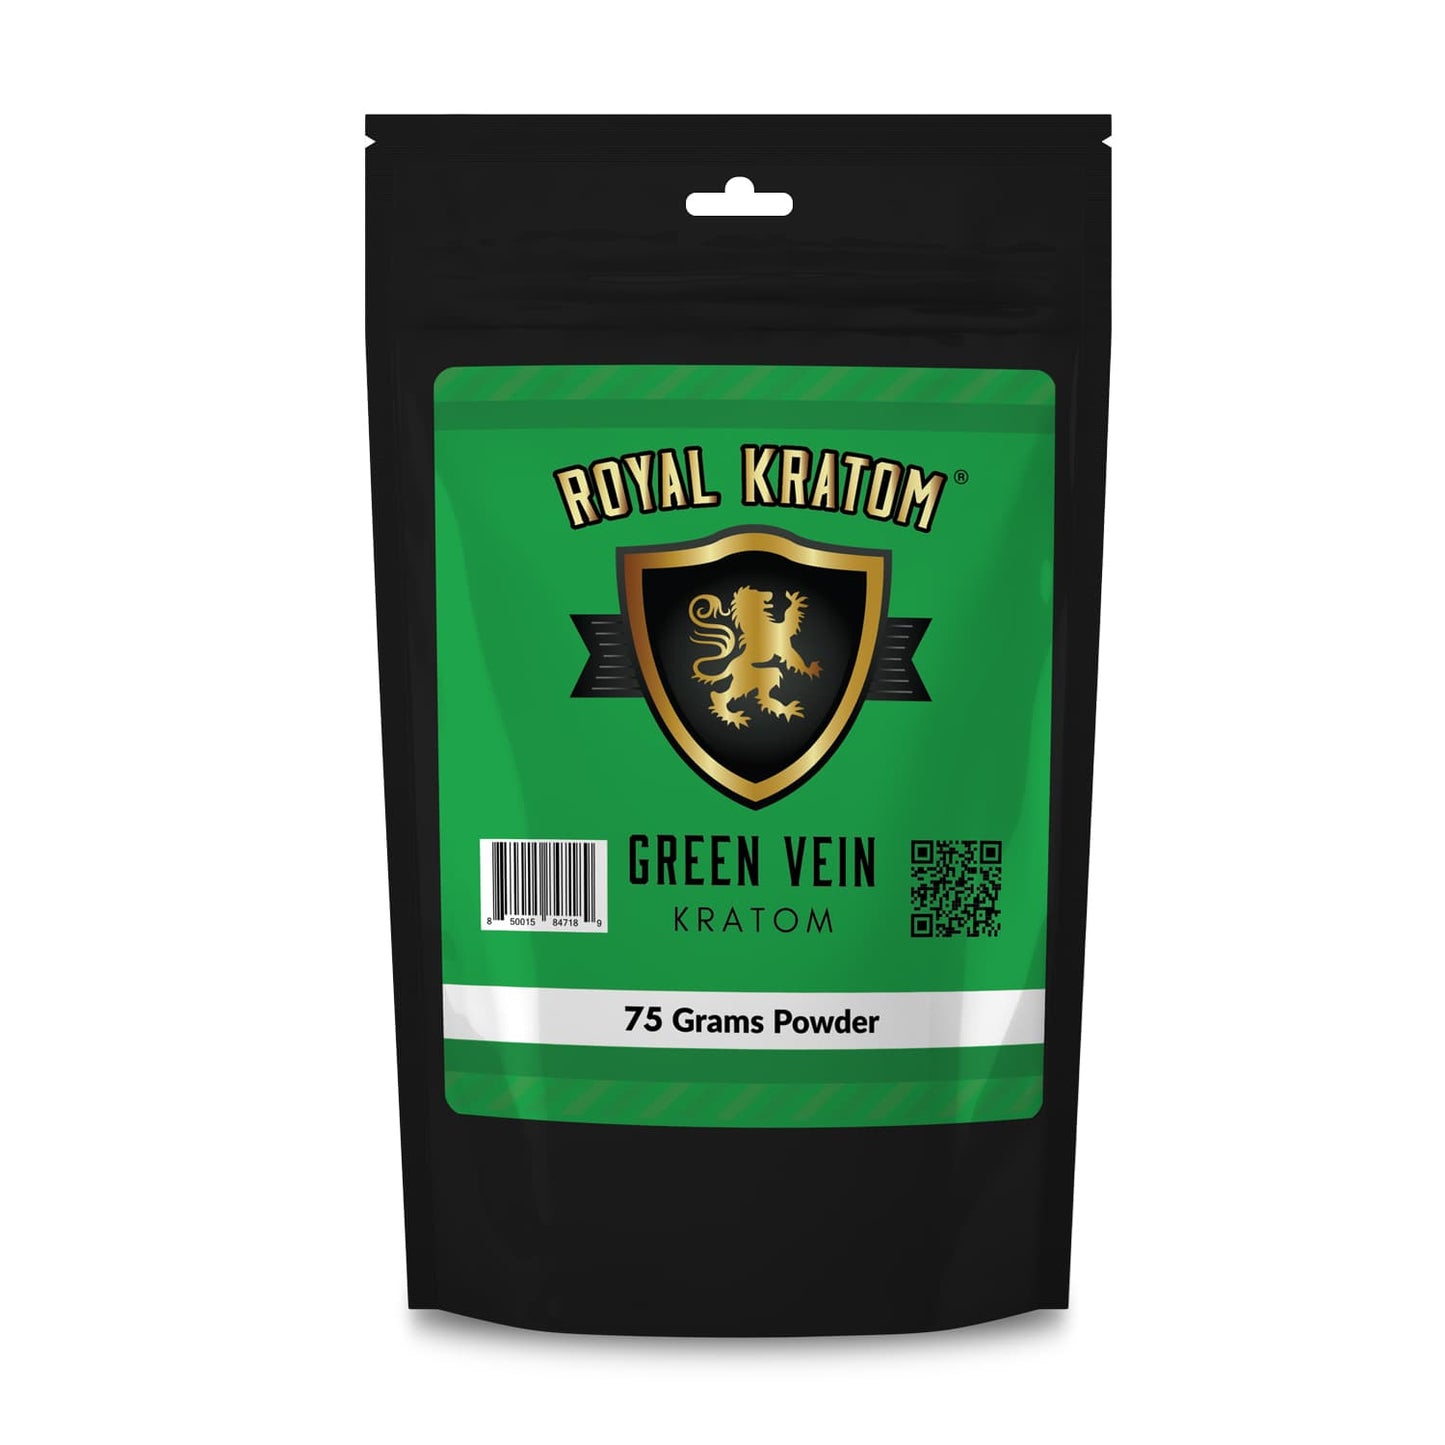 Royal Kratom green vein kratom powder 75 grams front packaging